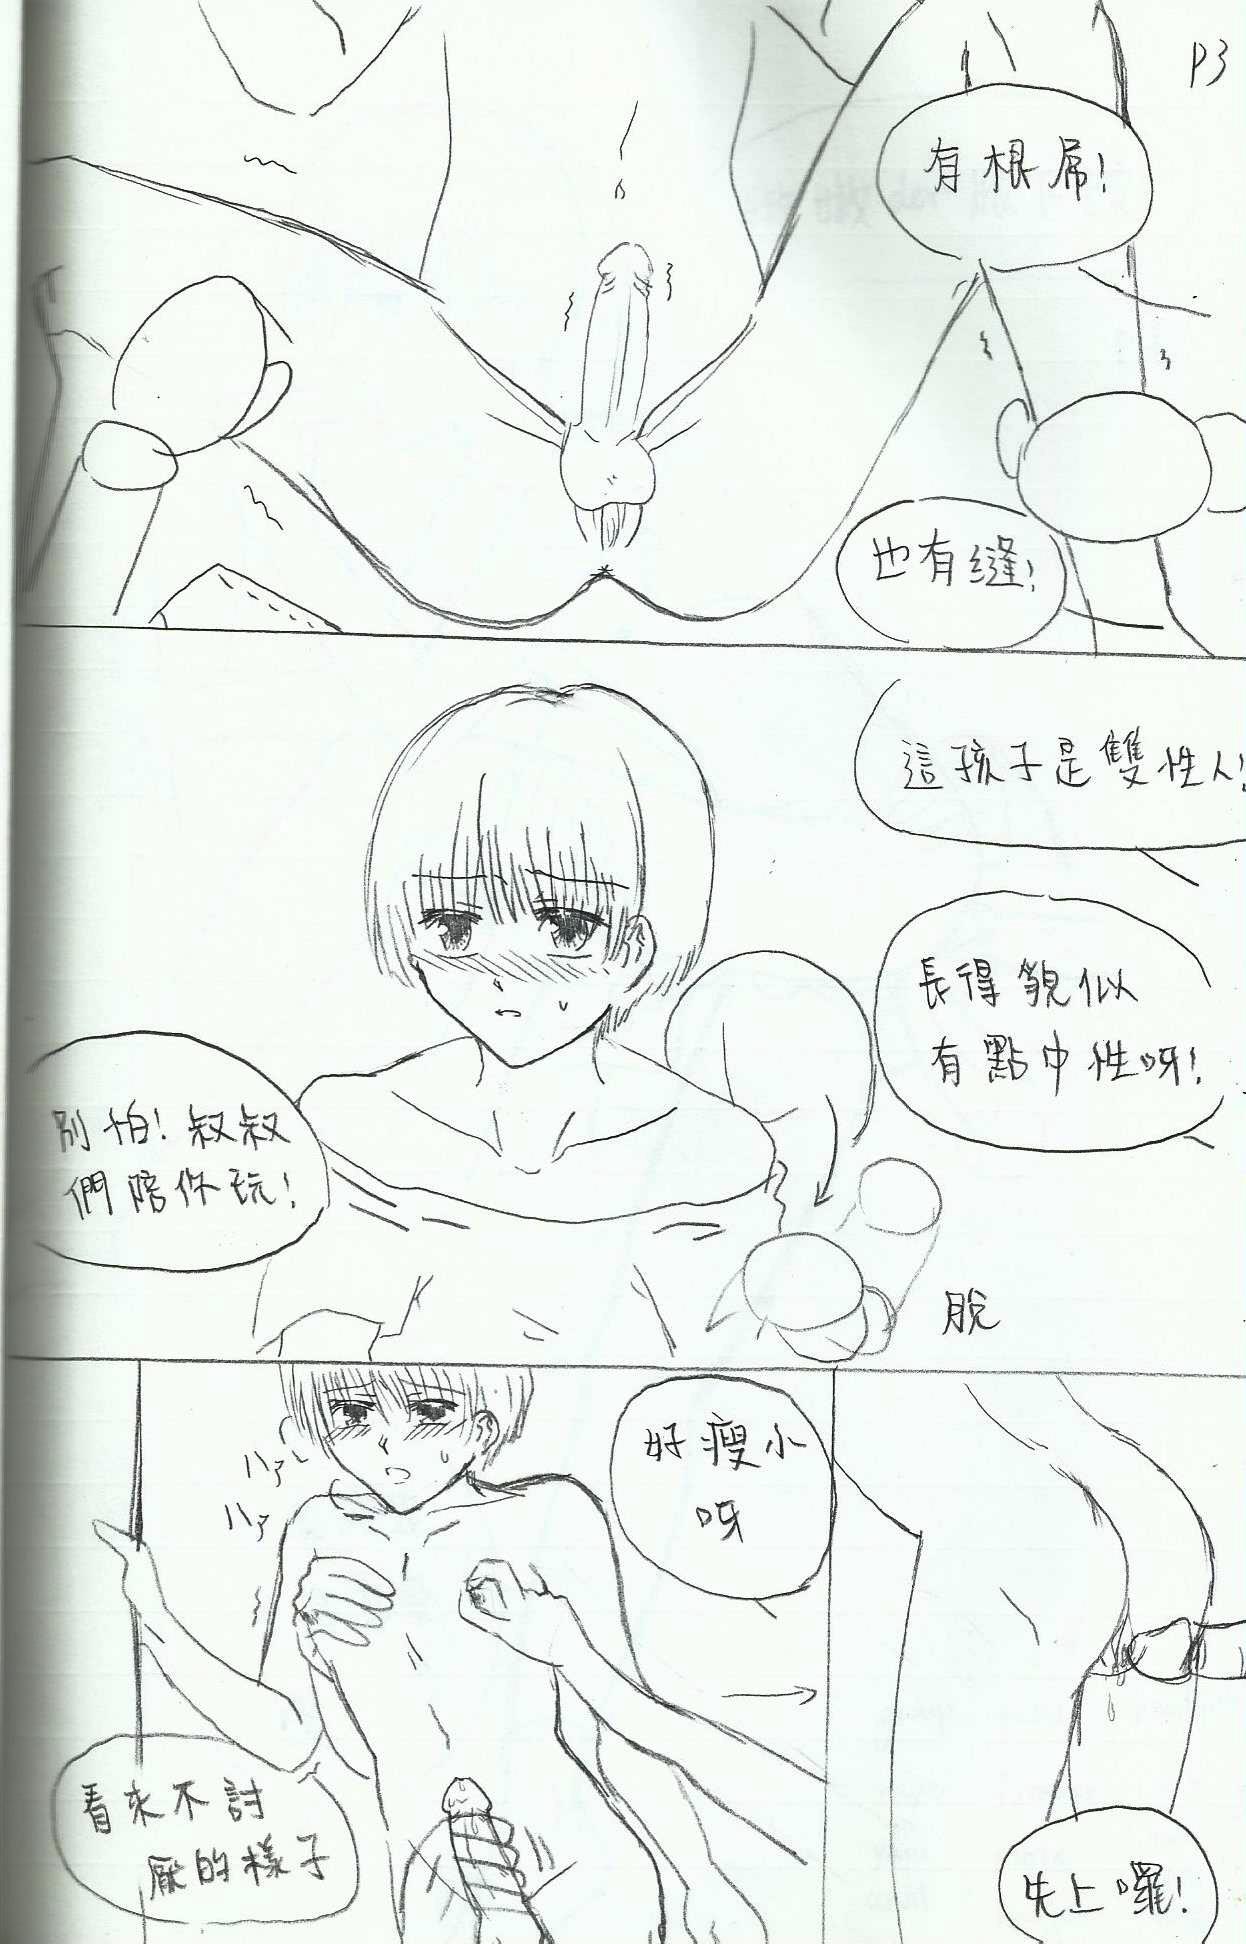 original futanari girly boy(or sweet trap?) comic 偽郎扶他小漫畫（中國語） 2